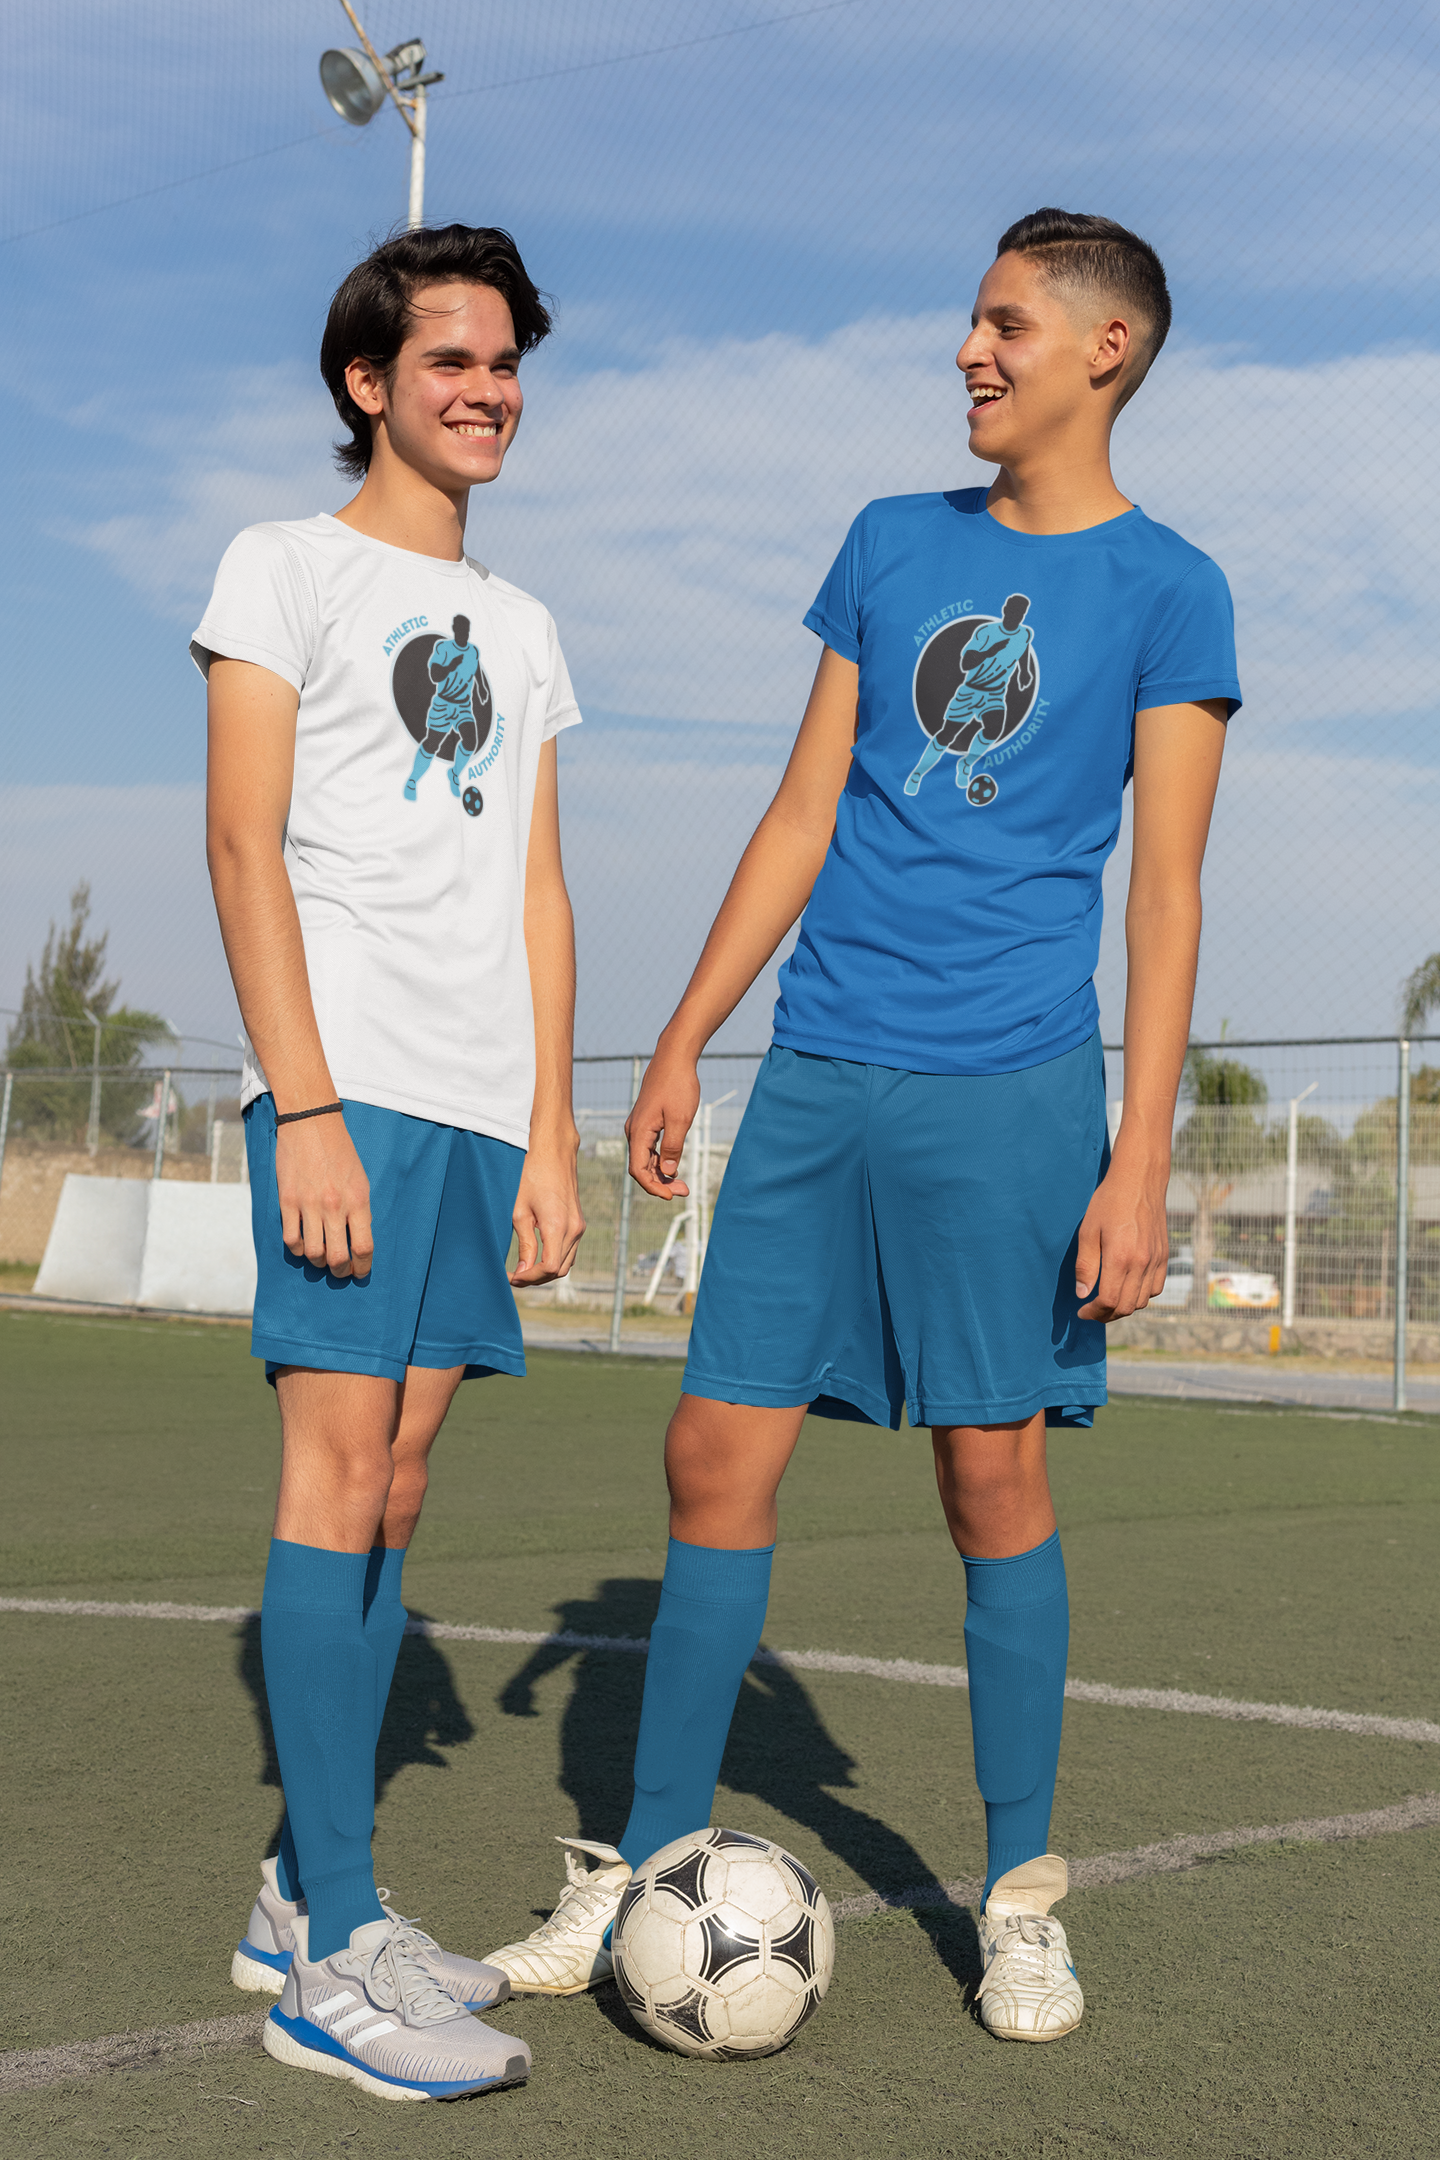 Athletic Authority " Soccer Sky Blue" Unisex Tri-Blend Short sleeve t-shirt